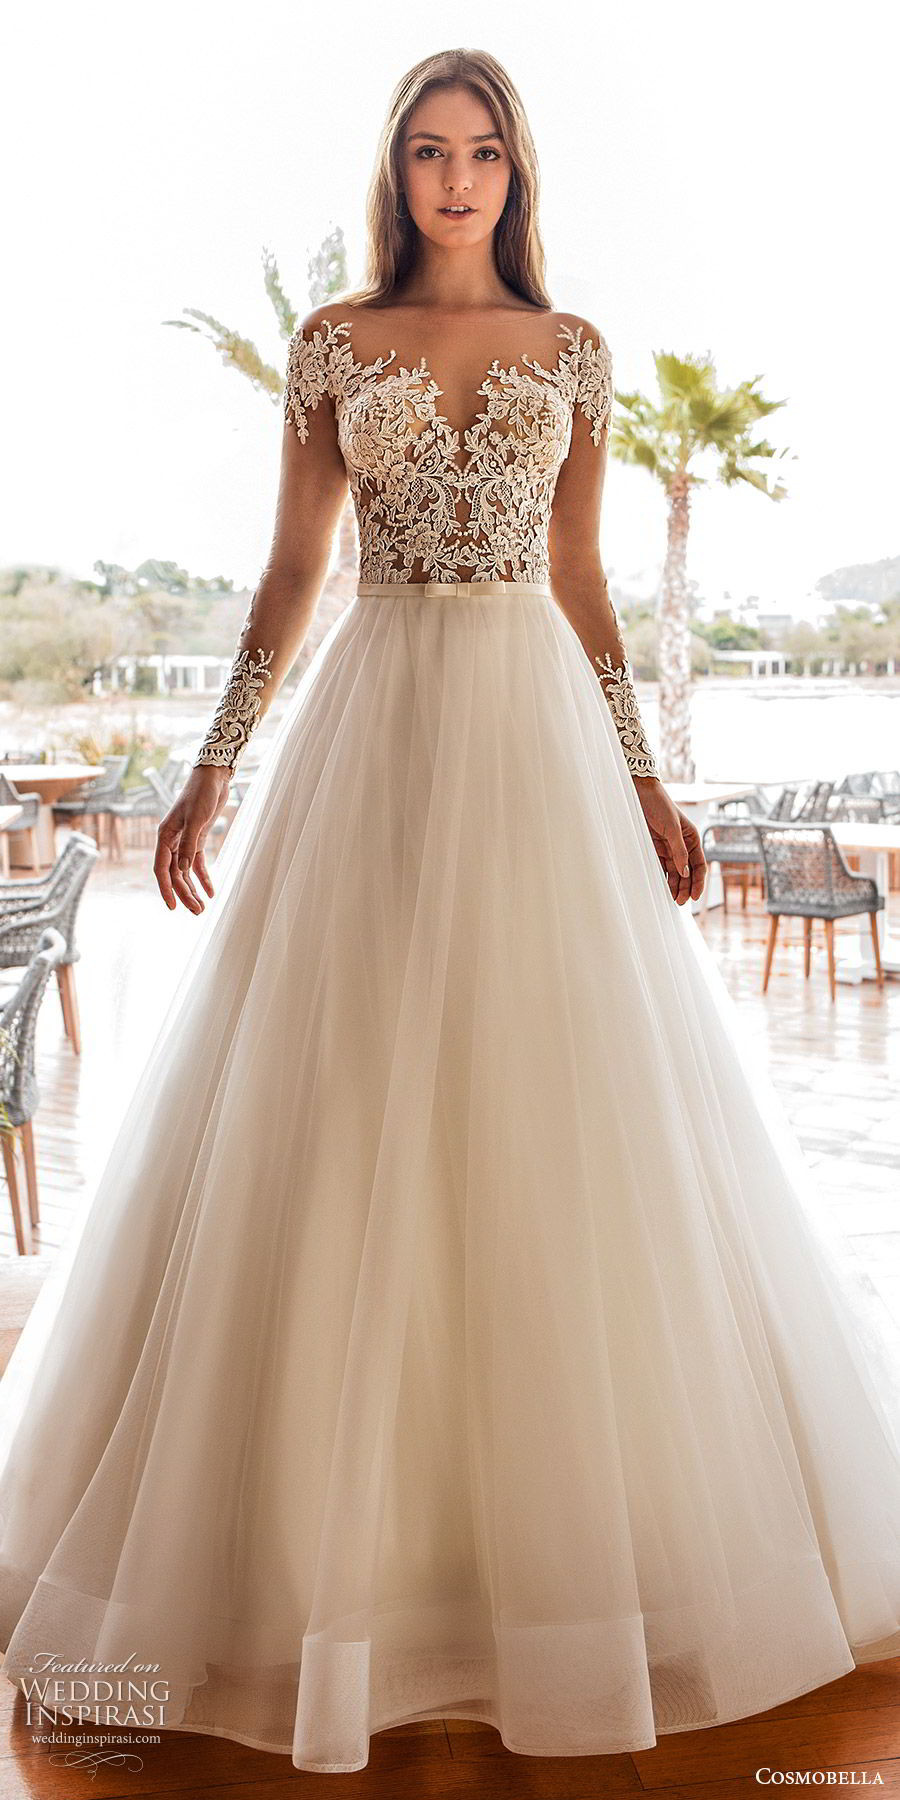 Wedding Ball Gowns 2020
 Cosmobella 2020 Wedding Dresses — “Eterea Eleganza” Bridal